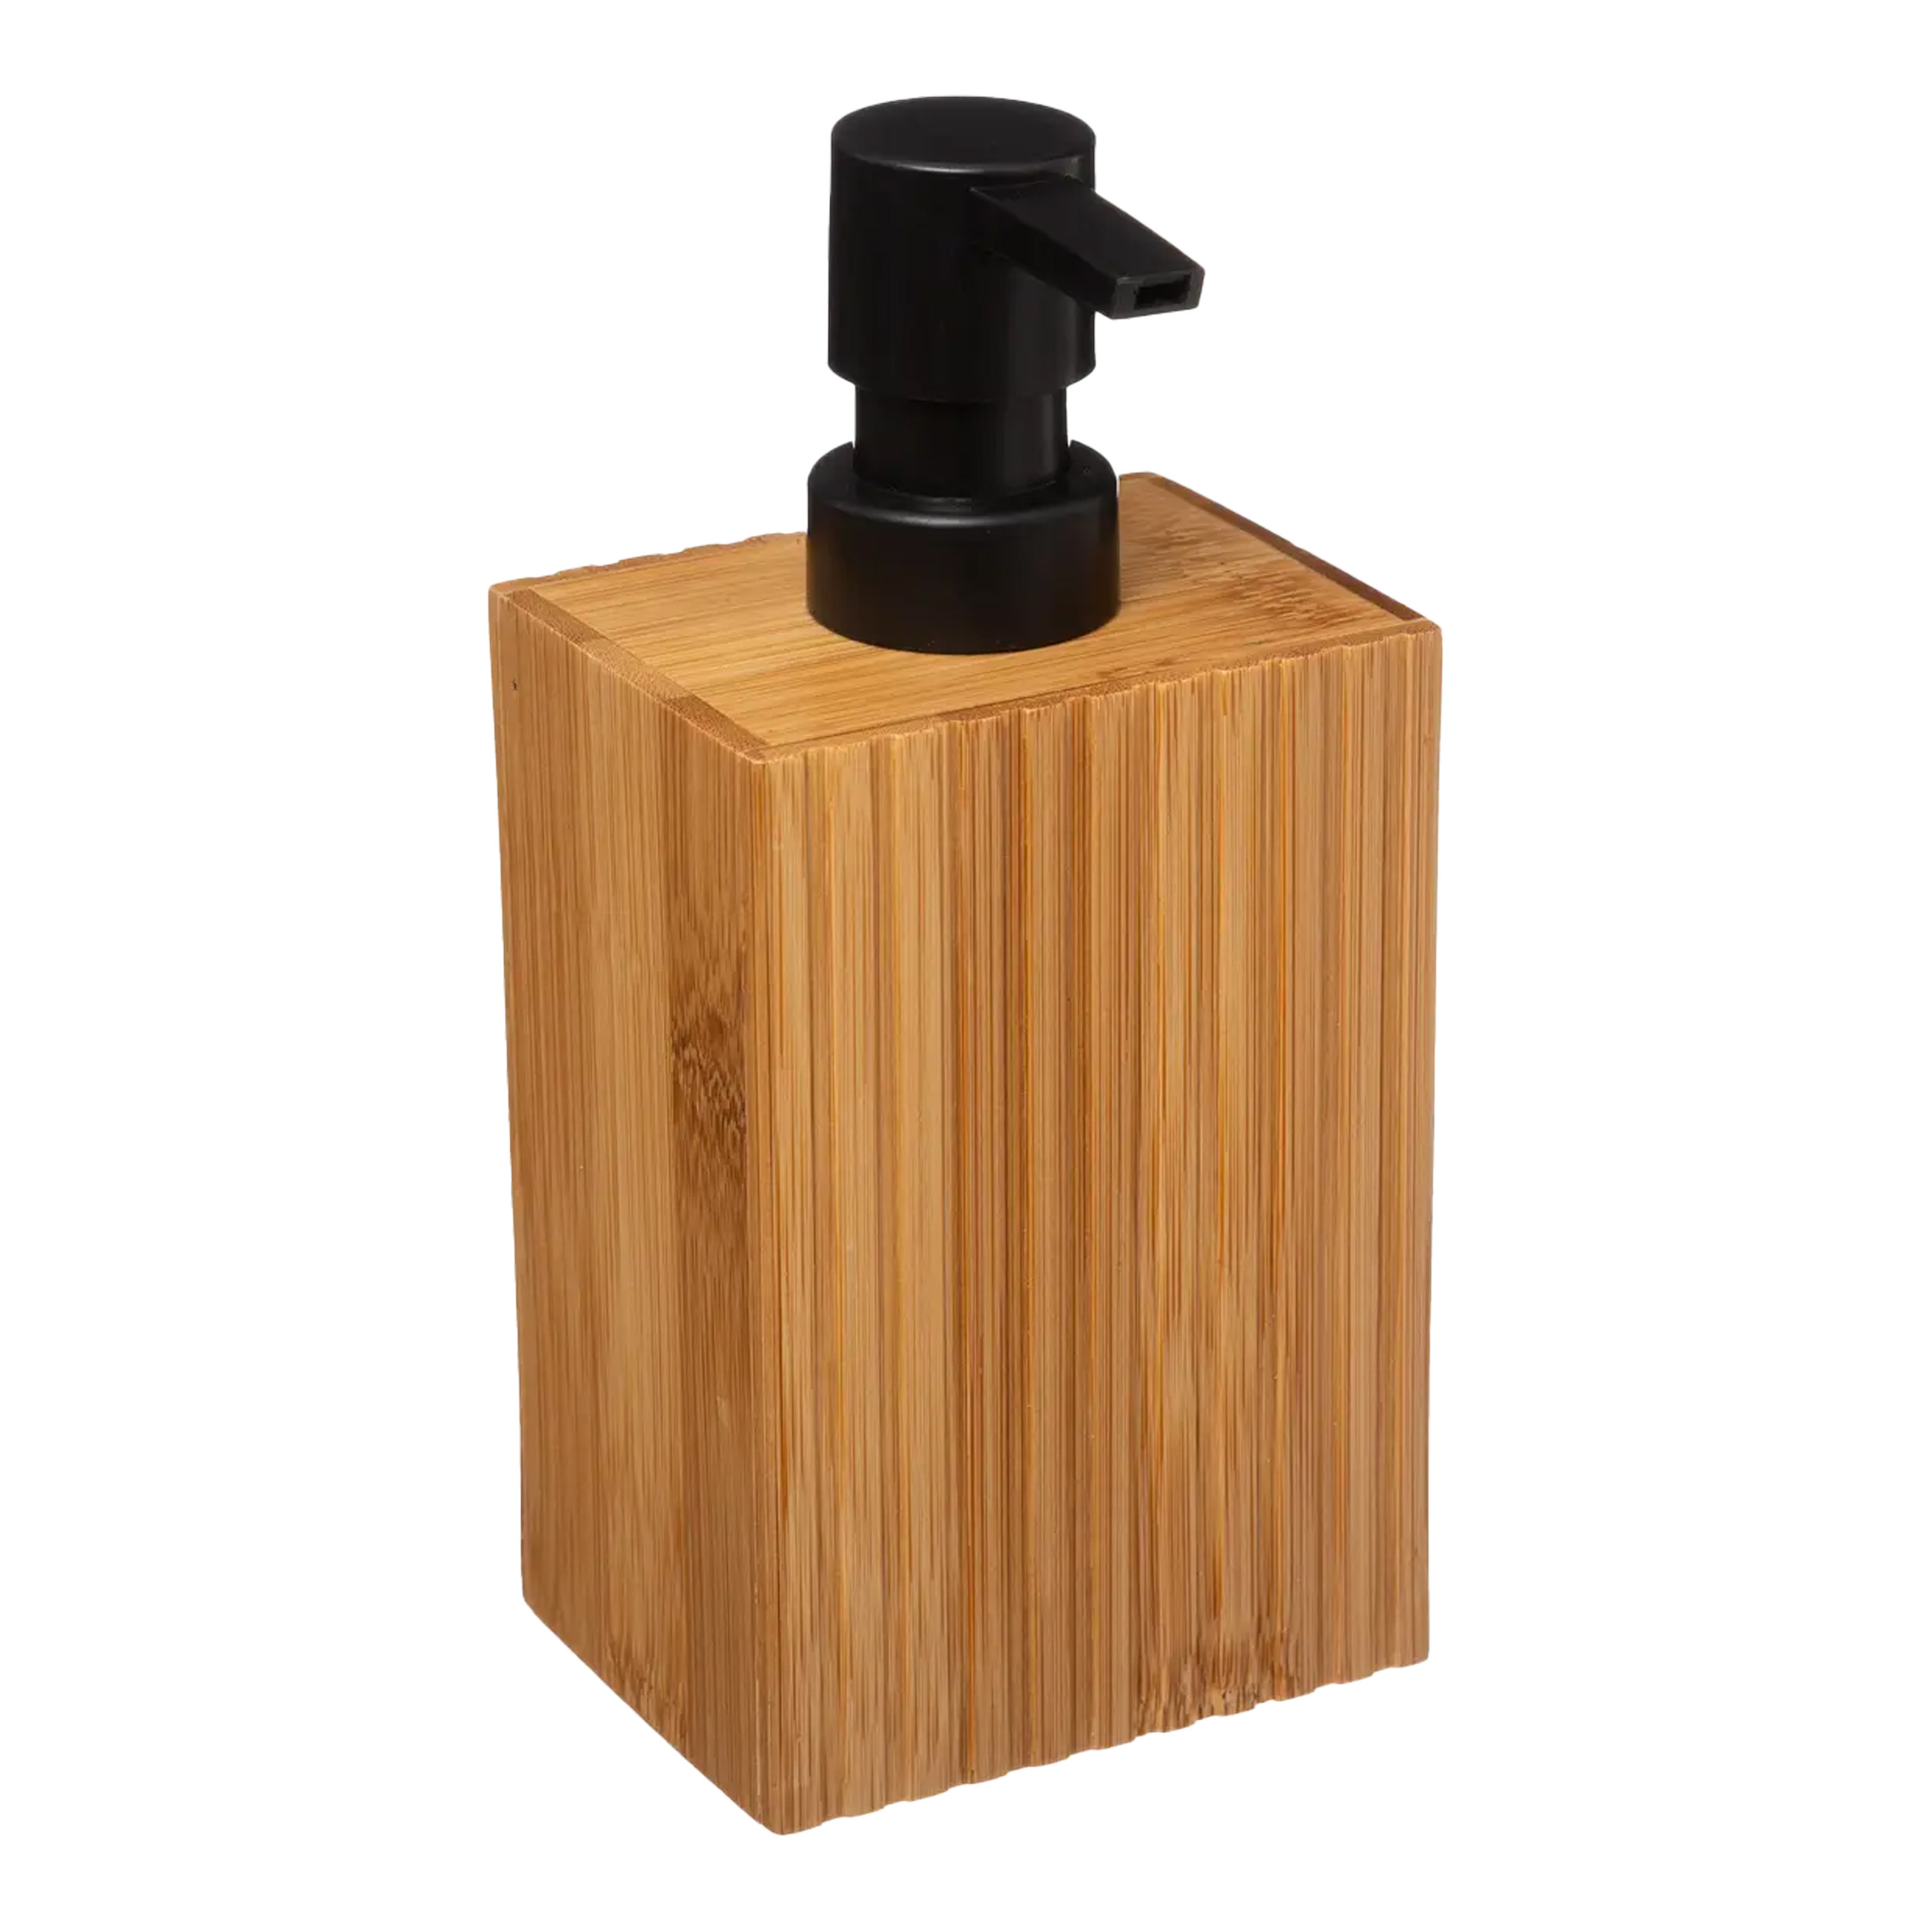 Zeeppompje-dispenser Bamboo Lotion lichtbruin-zwart 8 x 17 cm 280 ml hout